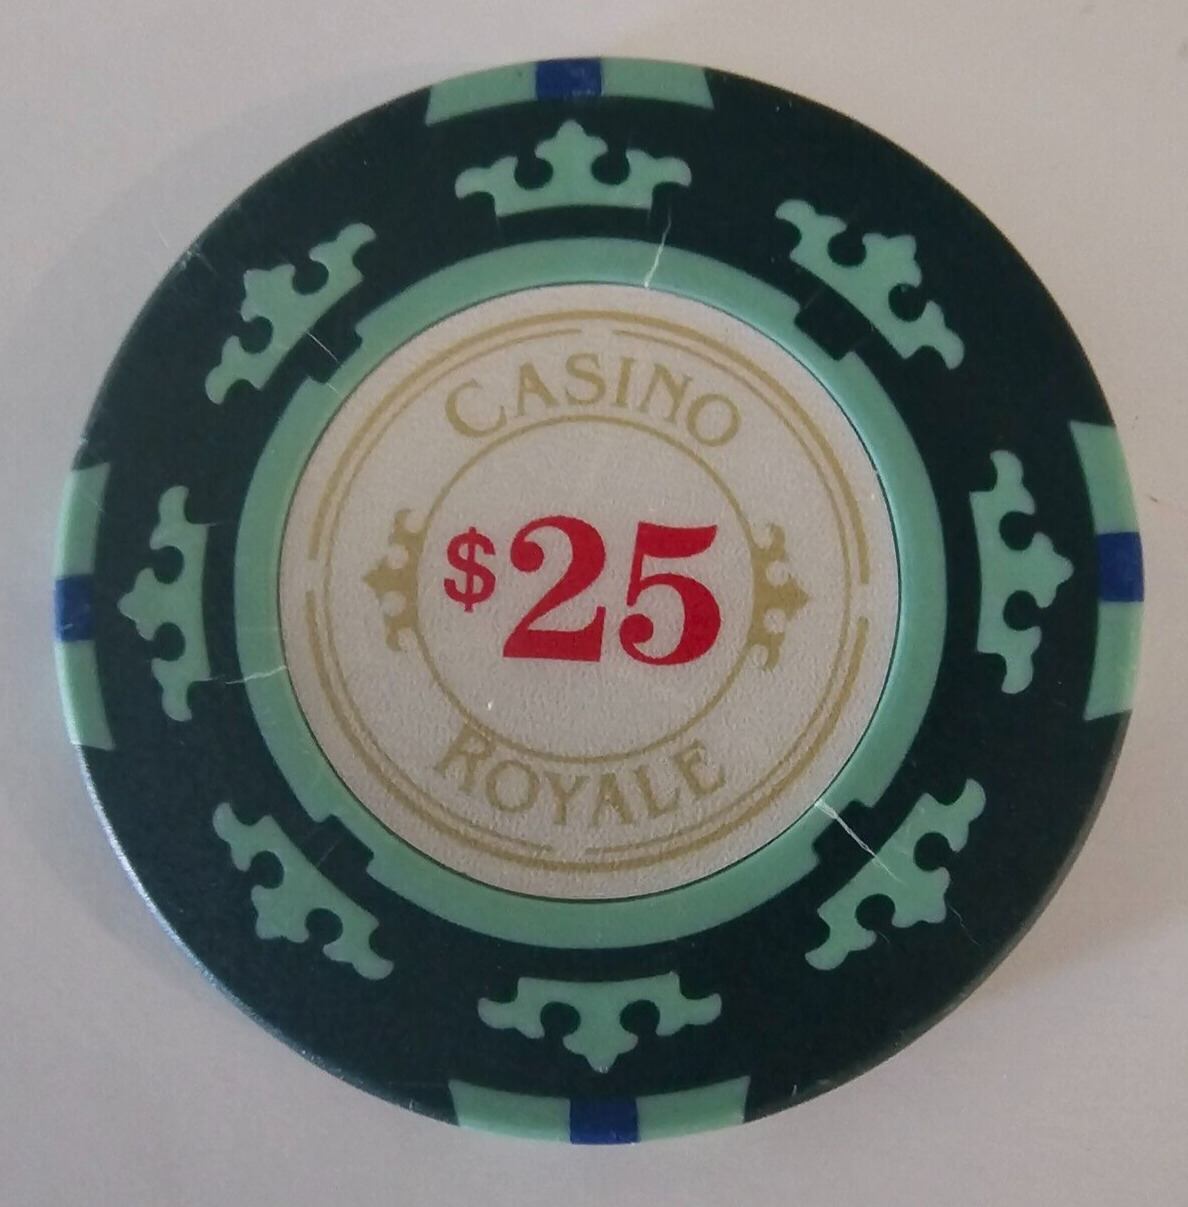 Casino Royale Las Vegas Strip $25 Table Game Chip